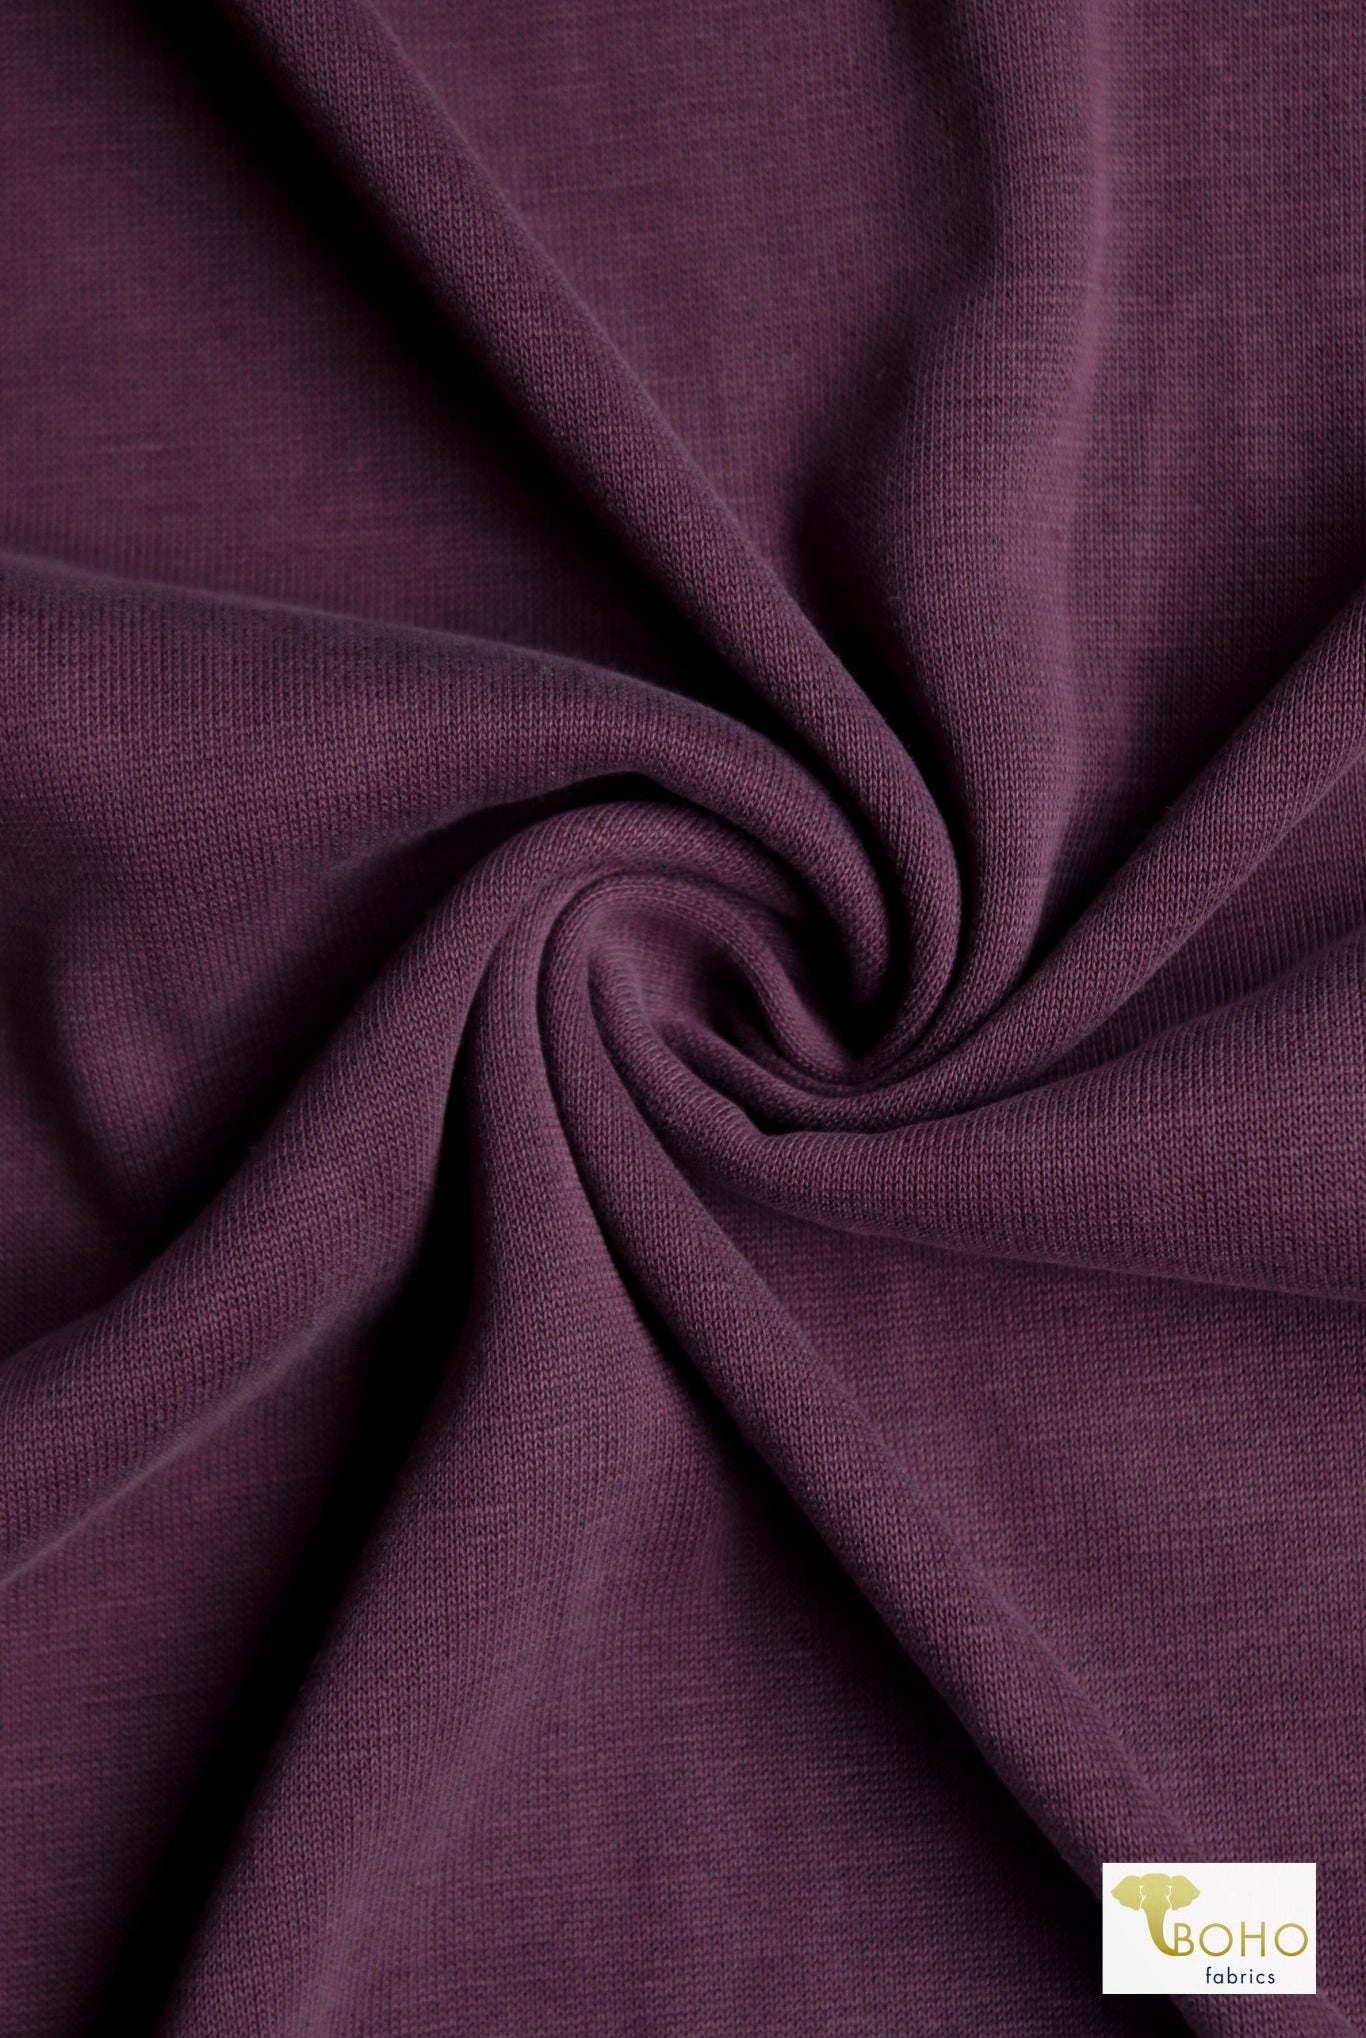 Plum, Solid Cupro Knit Fabric - Boho Fabrics - Cupro, Knit Fabric